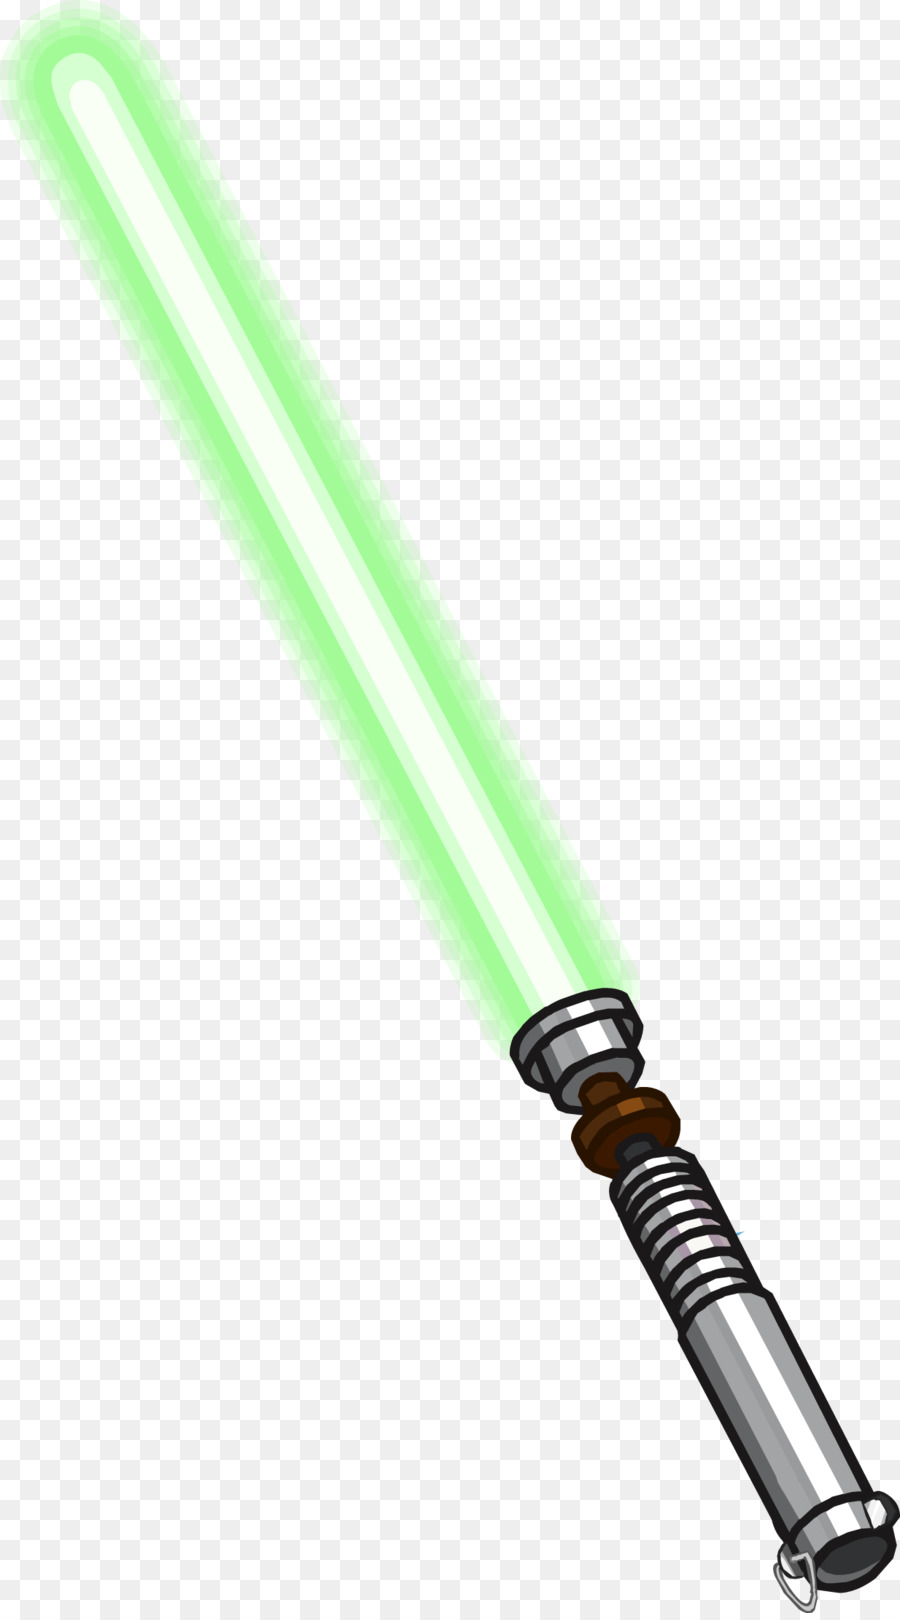 Luke Skywalker Obi-Wan Kenobi Anakin Skywalker Yoda Ahsoka Tano - laser png download - 1234*2211 - Free Transparent Luke Skywalker png Download.